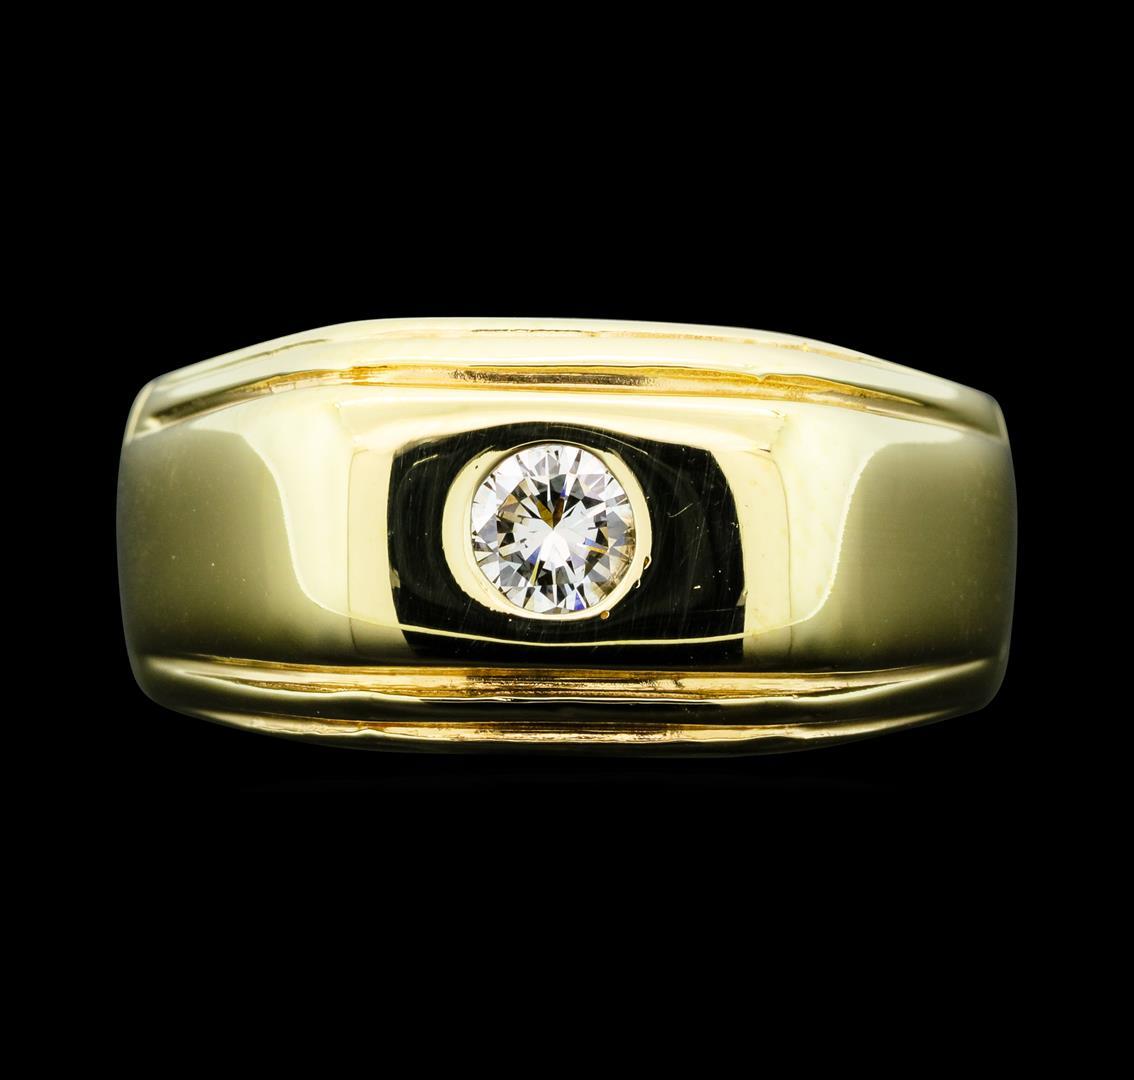 0.25 ctw Diamond Ring - 14KT Yellow Gold